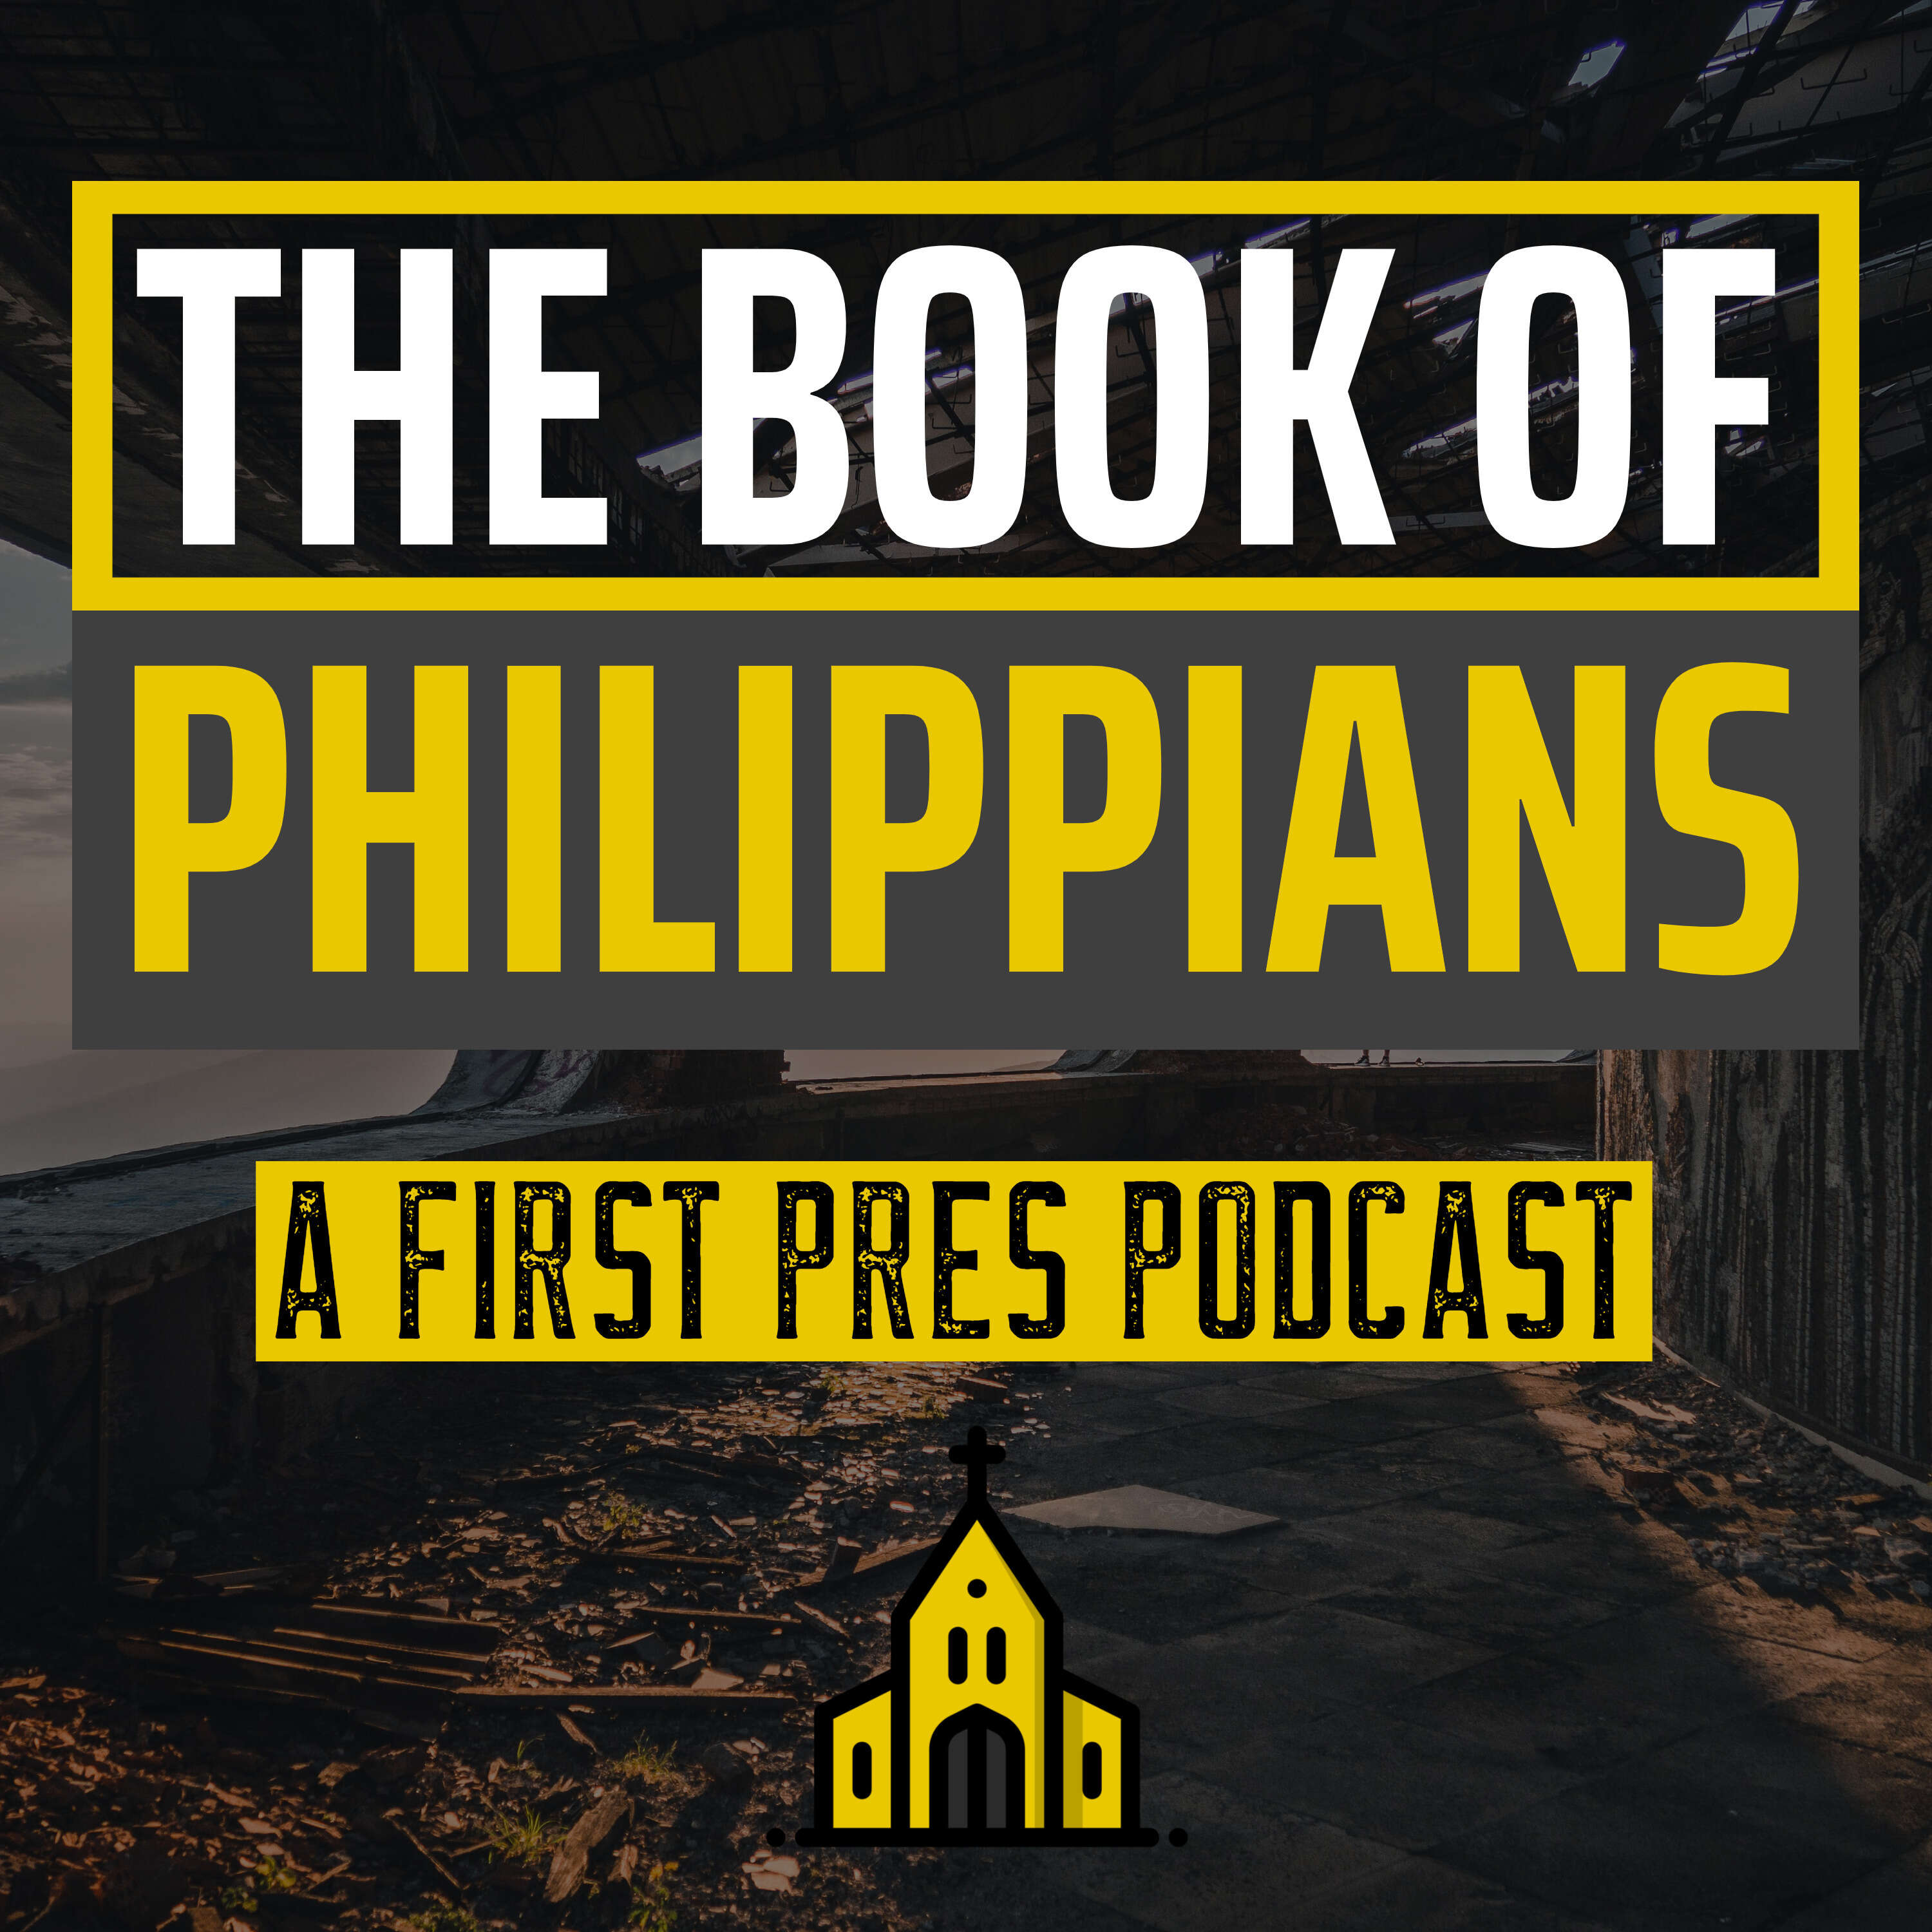 Artwork for podcast Philippians